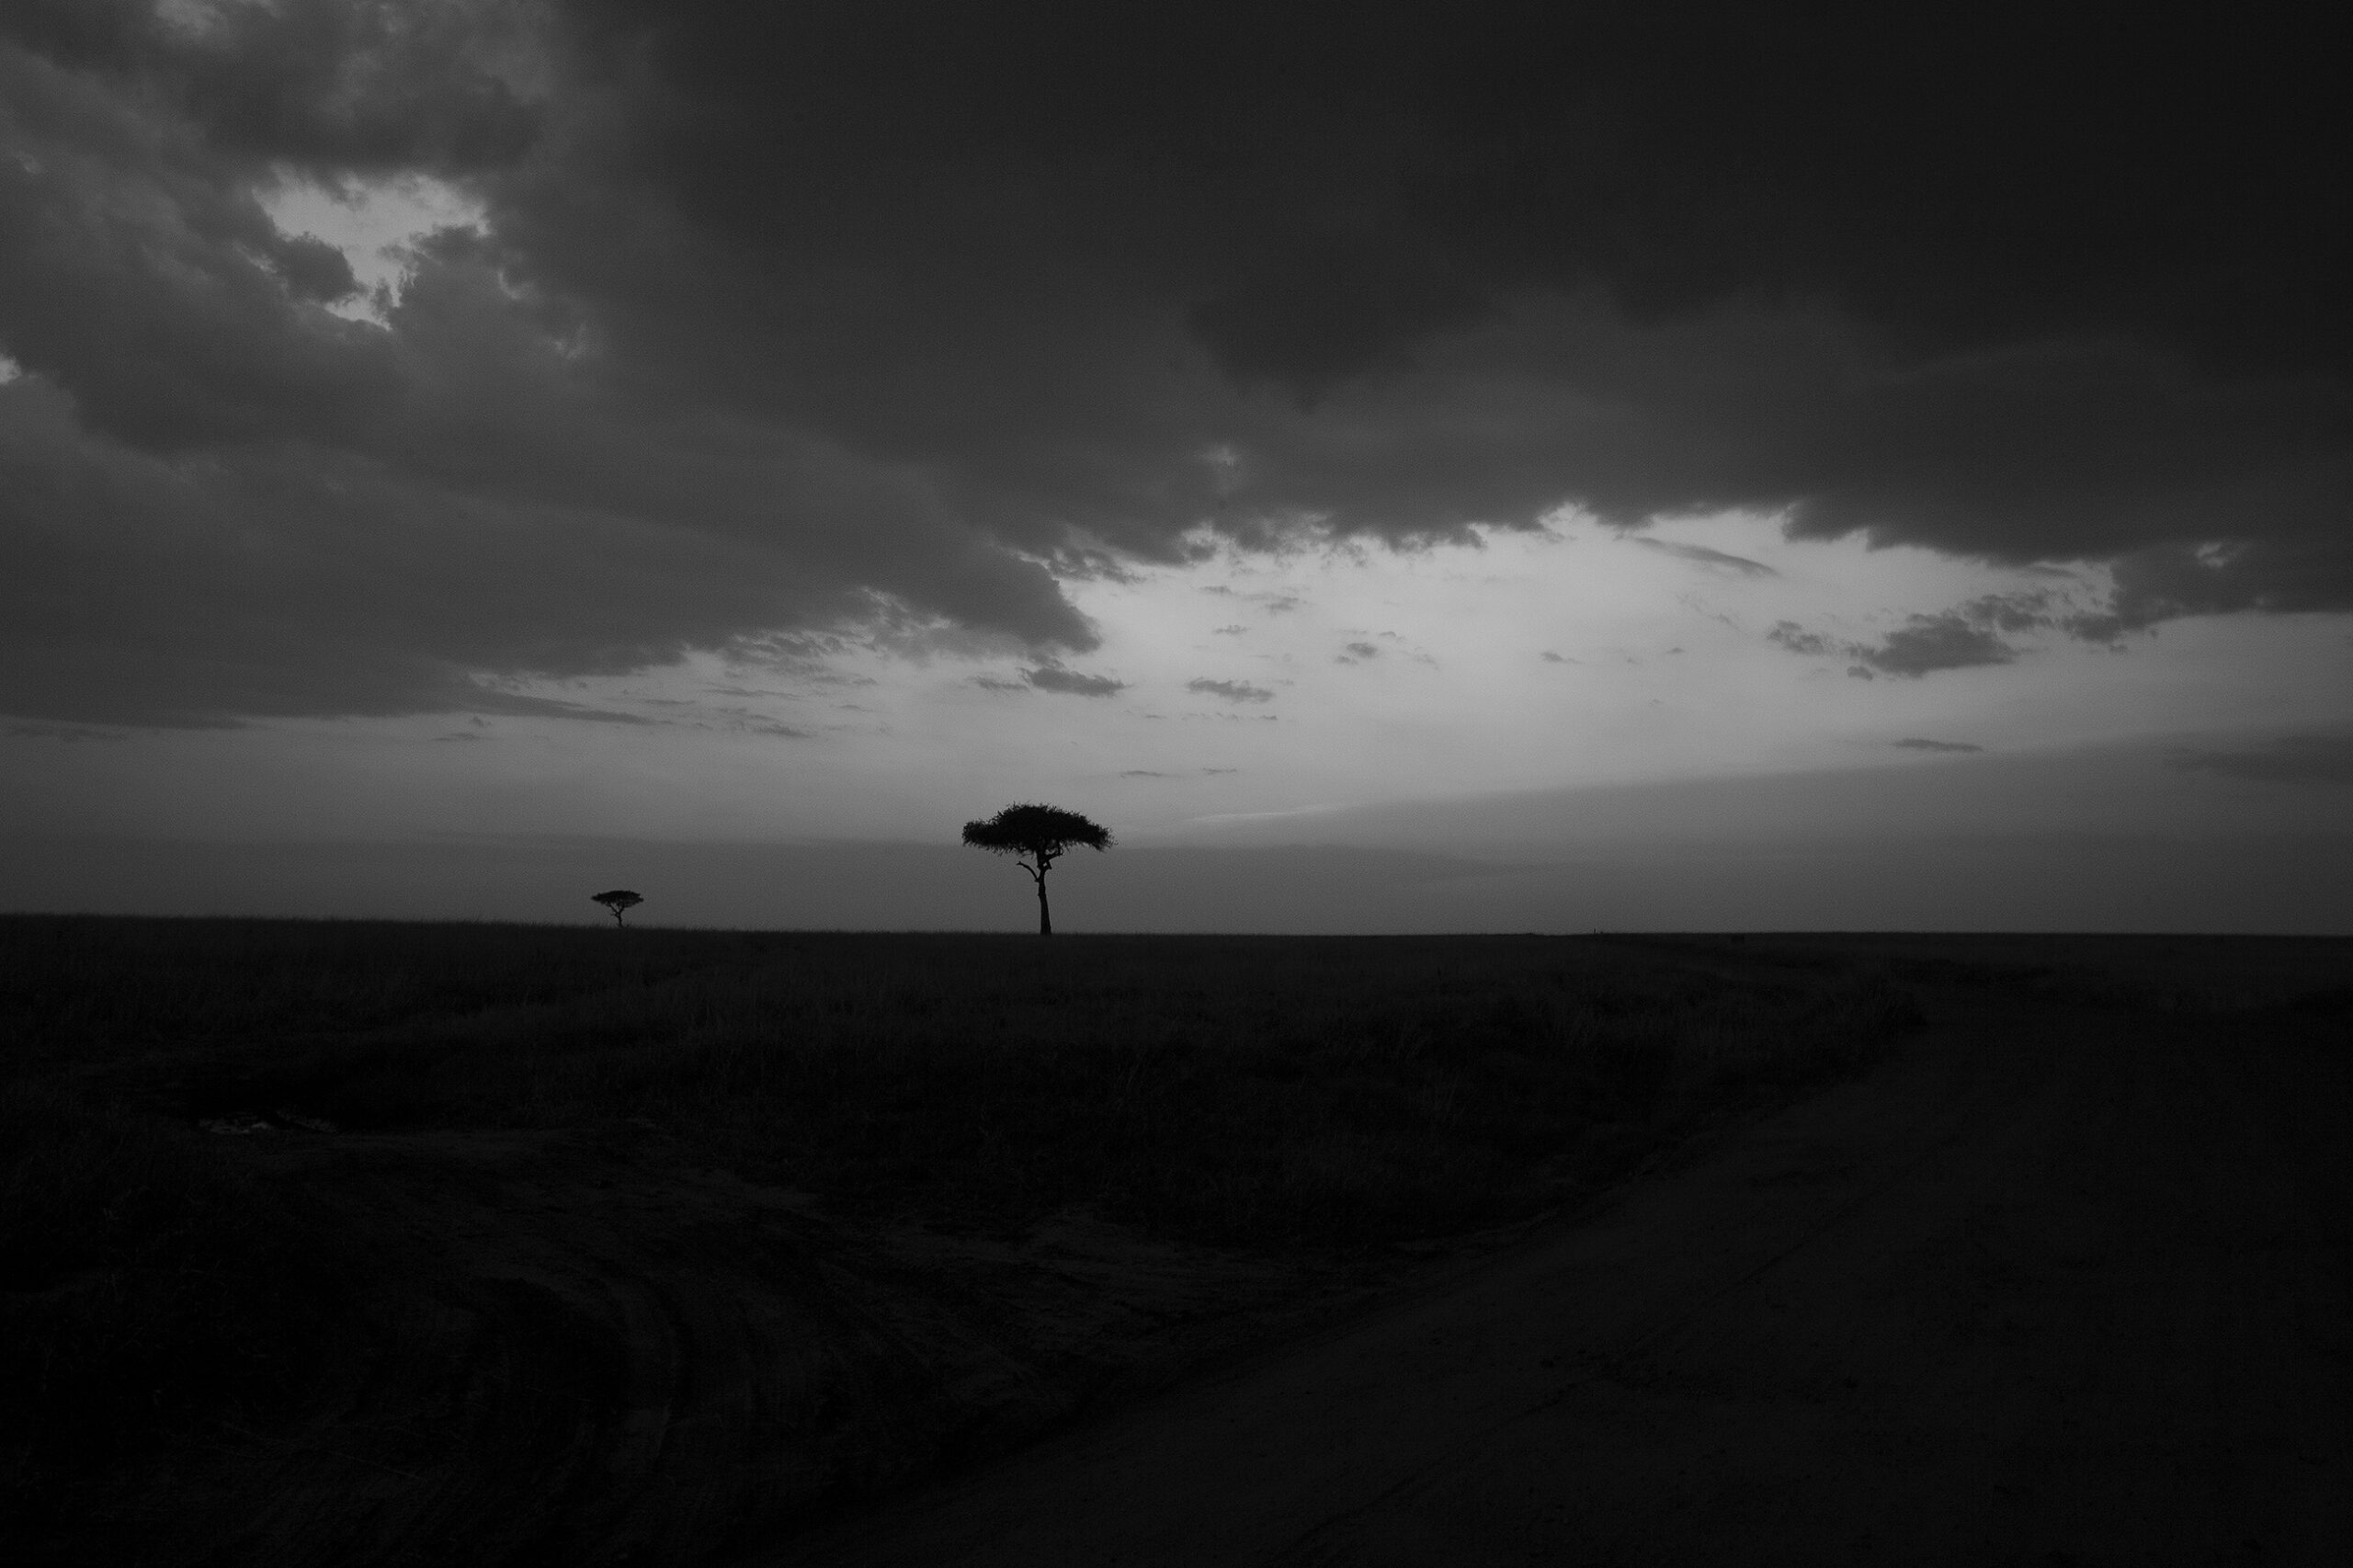 flavio_oliva_documentarist_director - africa on the road - reportage